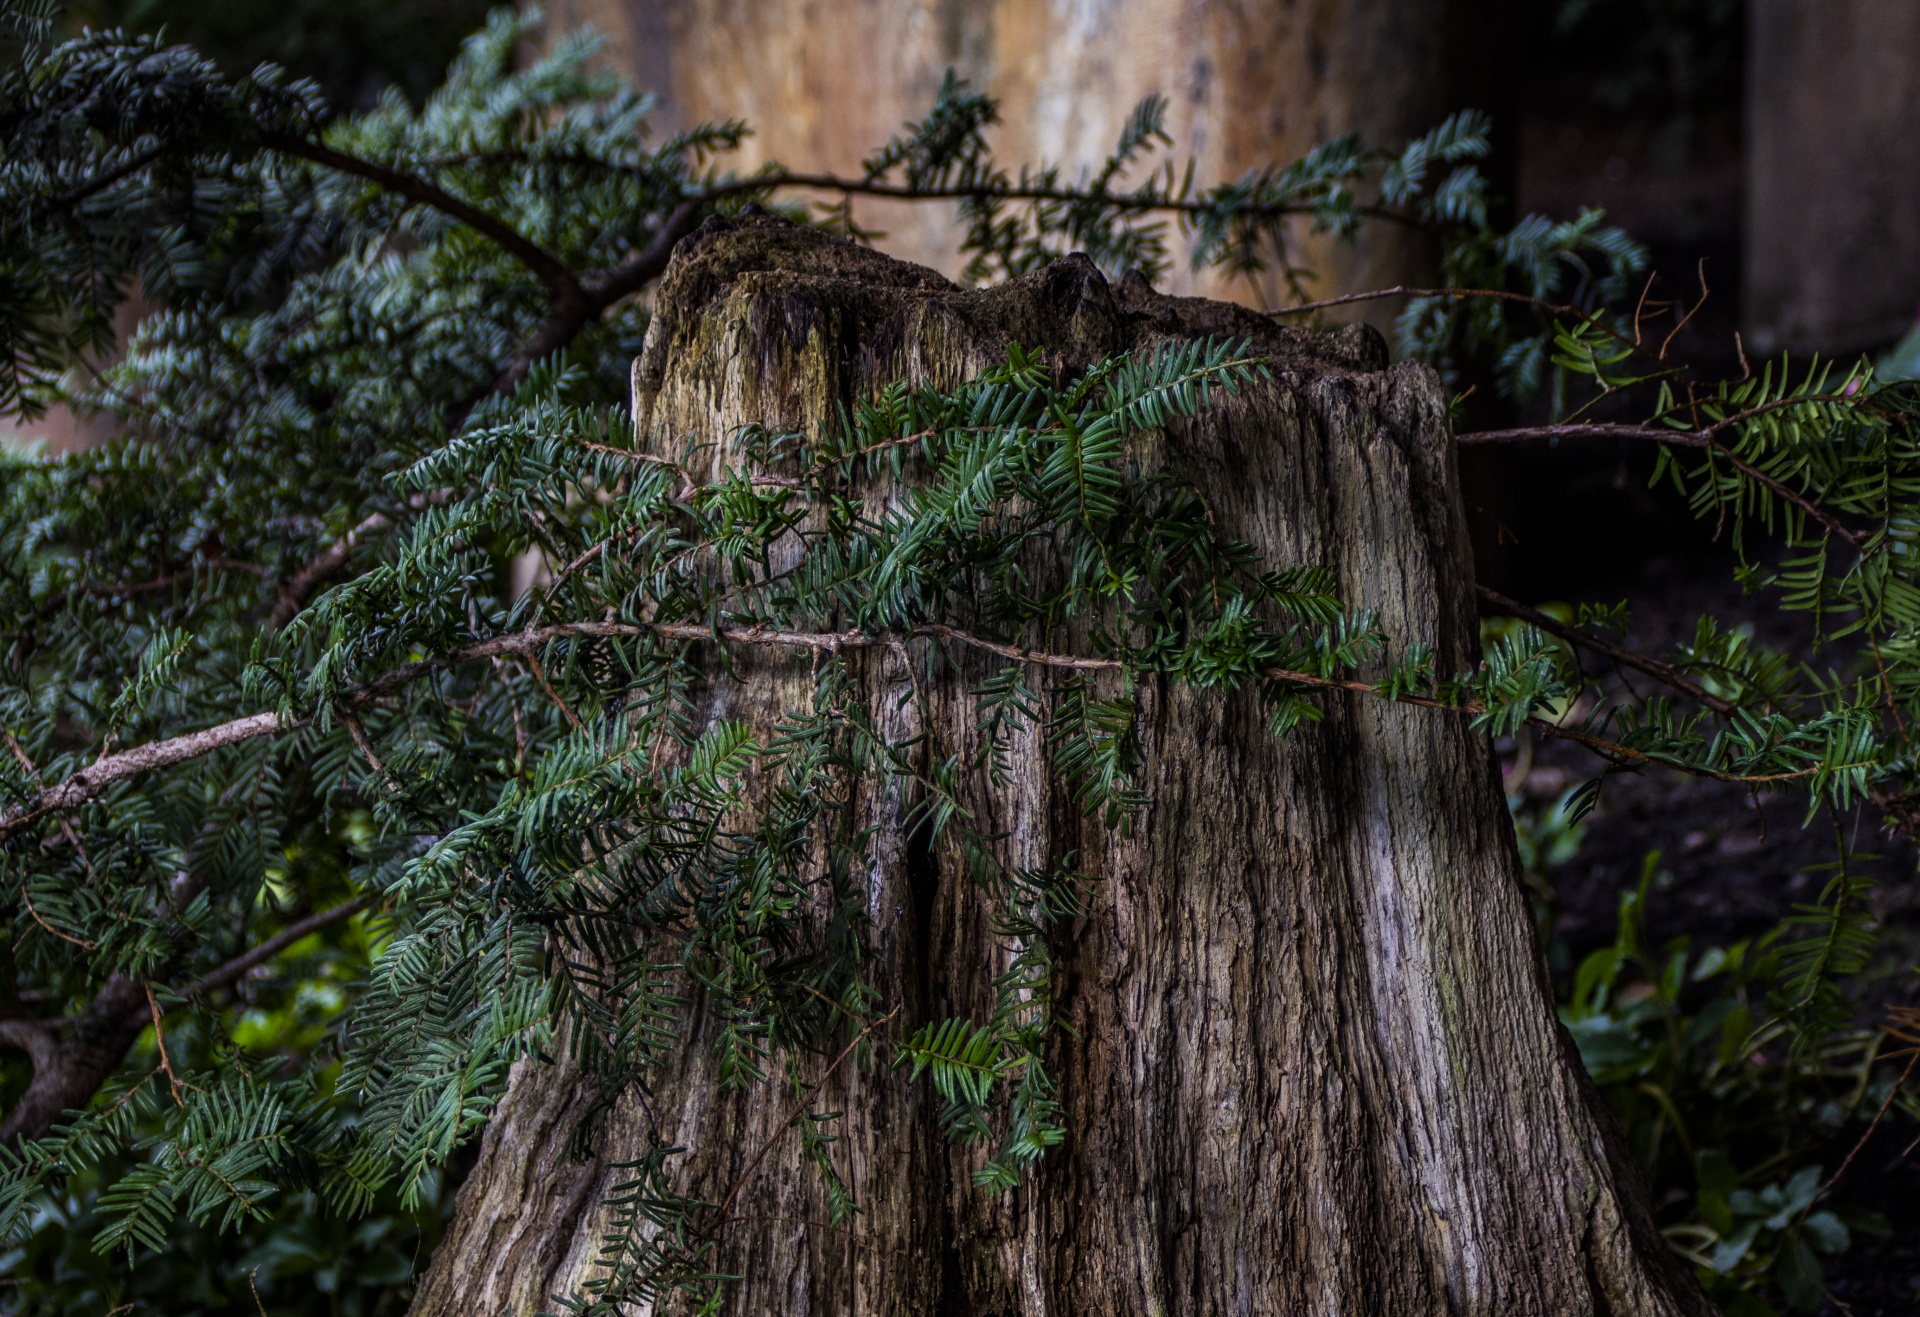 Pine branches grow across a pine tree stump